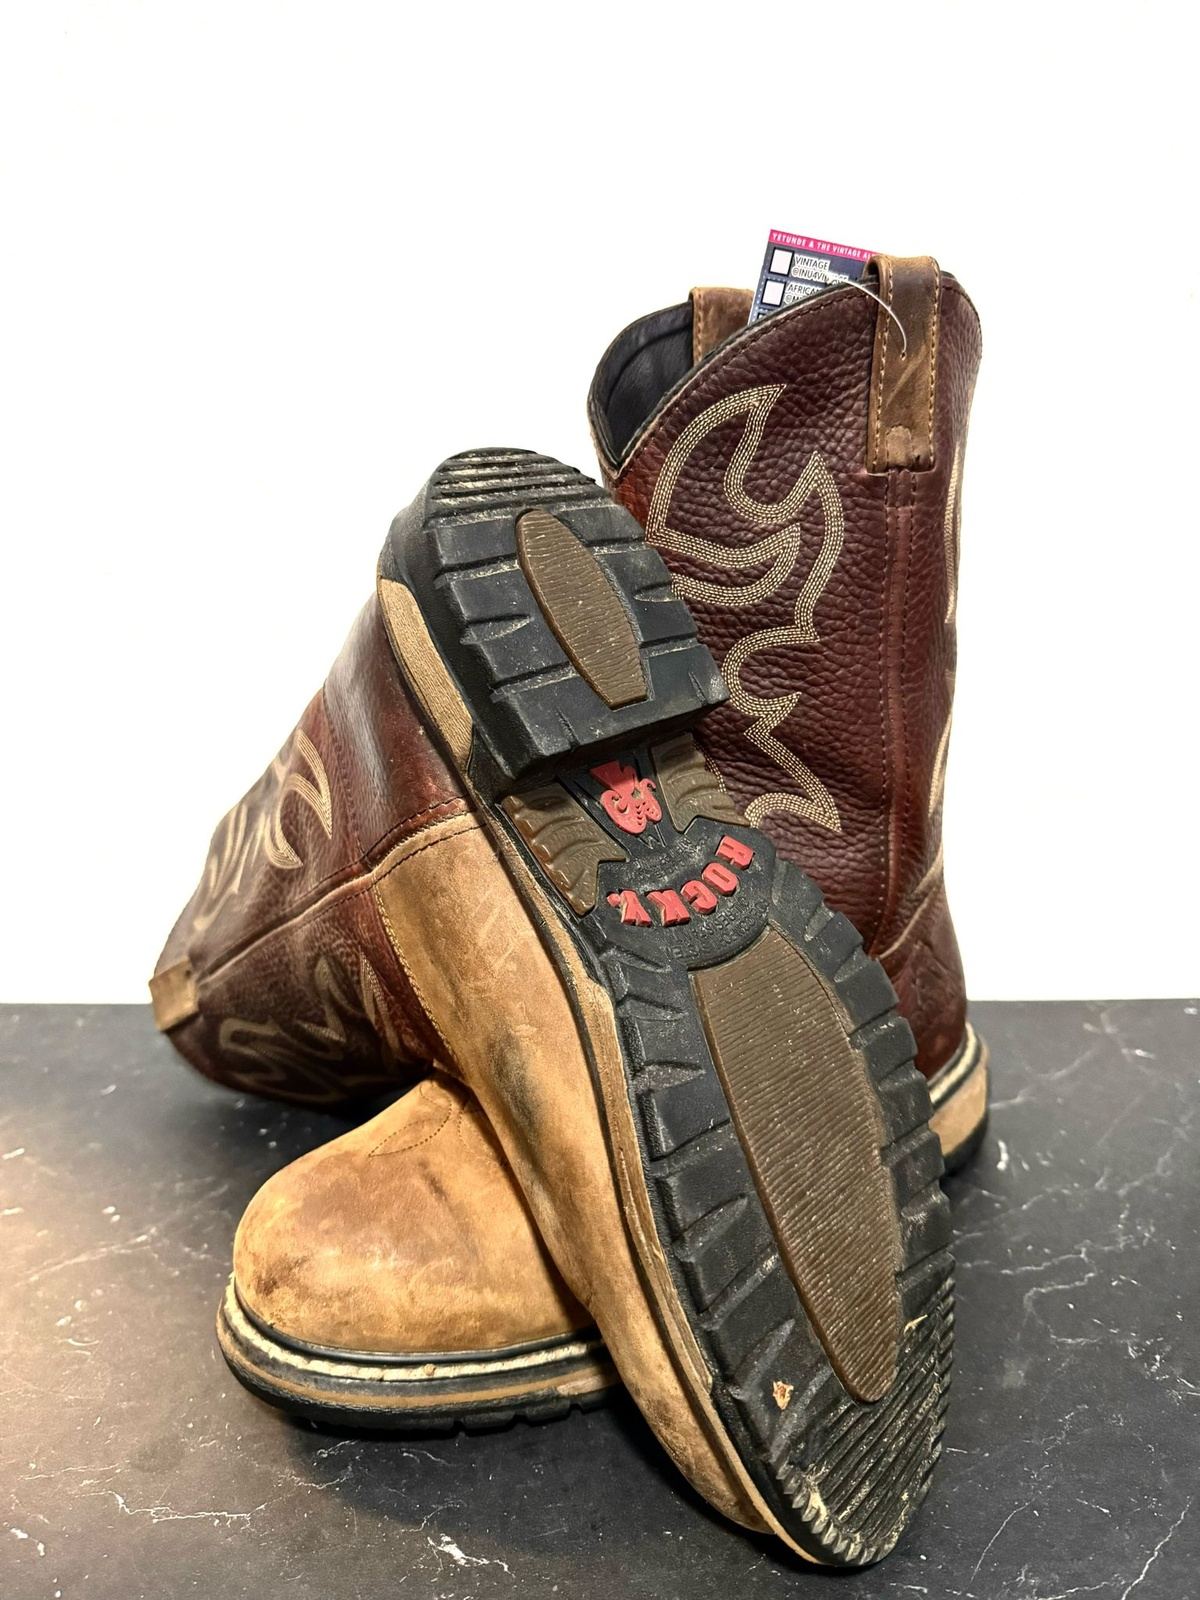 Vintage Rocky men steel toe work boot